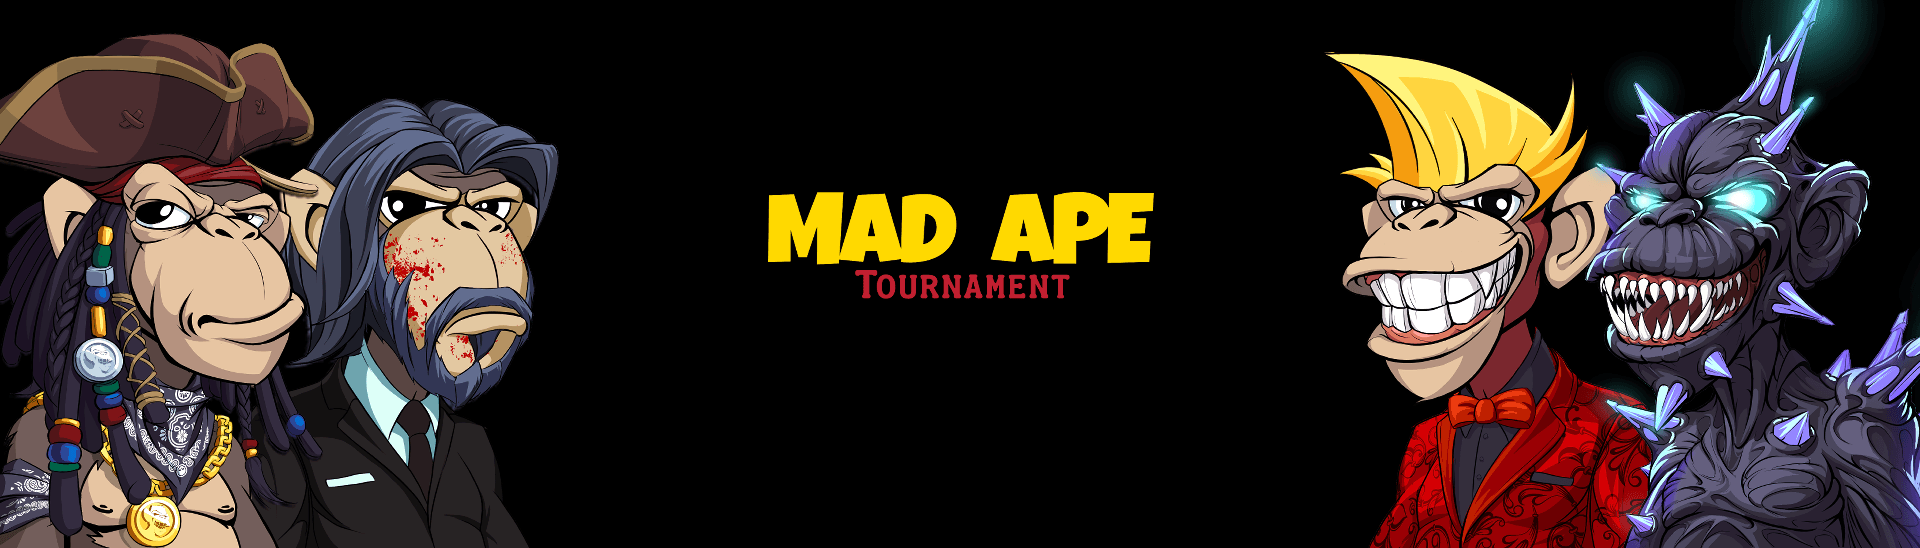 Mad Ape Tournament